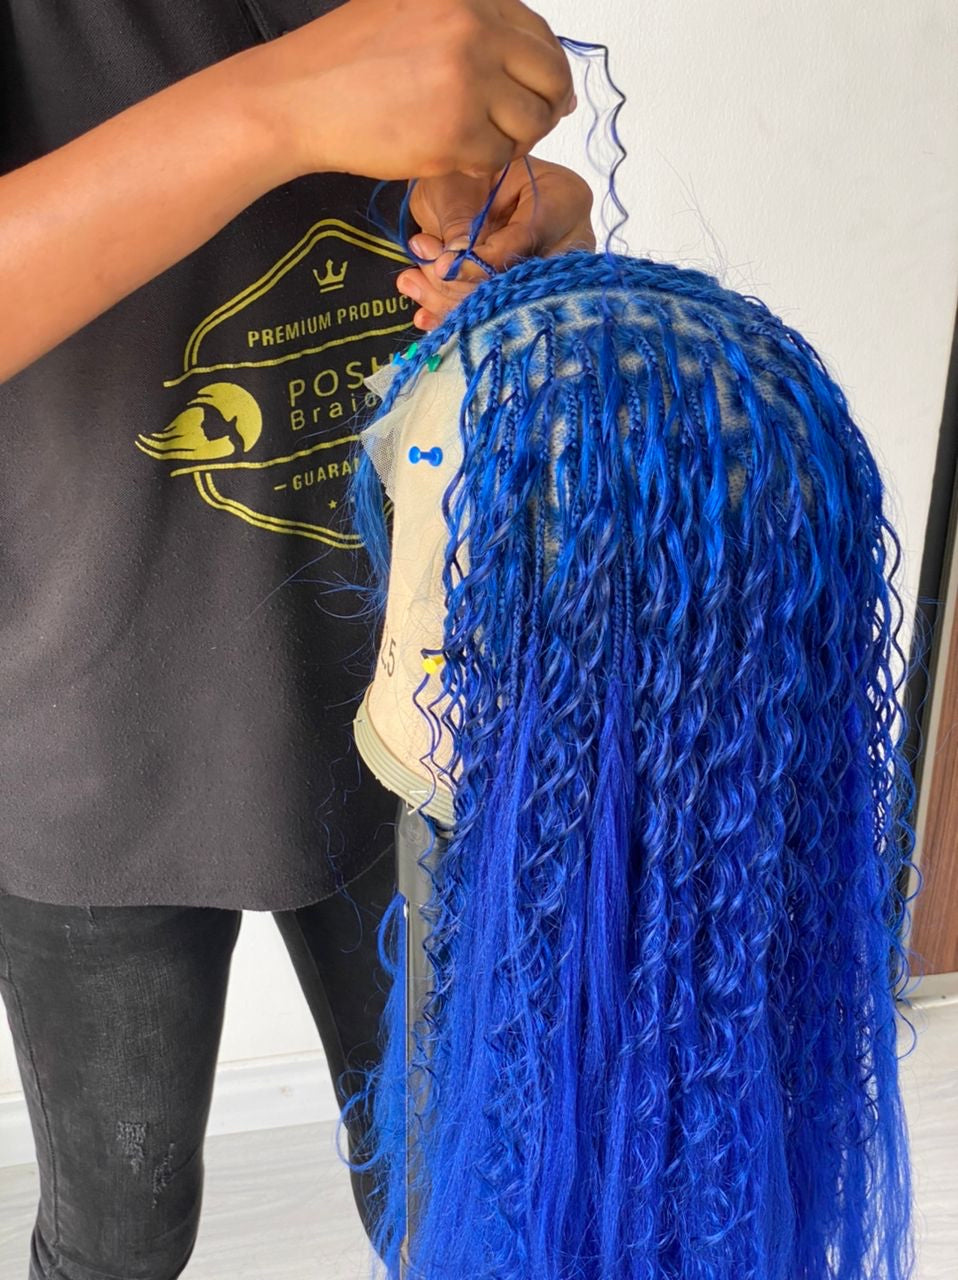 Bohemian Knotless Braid Wig (100% Human Hair Curls) Full Lace - Tara Blue Poshglad Braided Wigs Bohemian Knotless Braid Wig